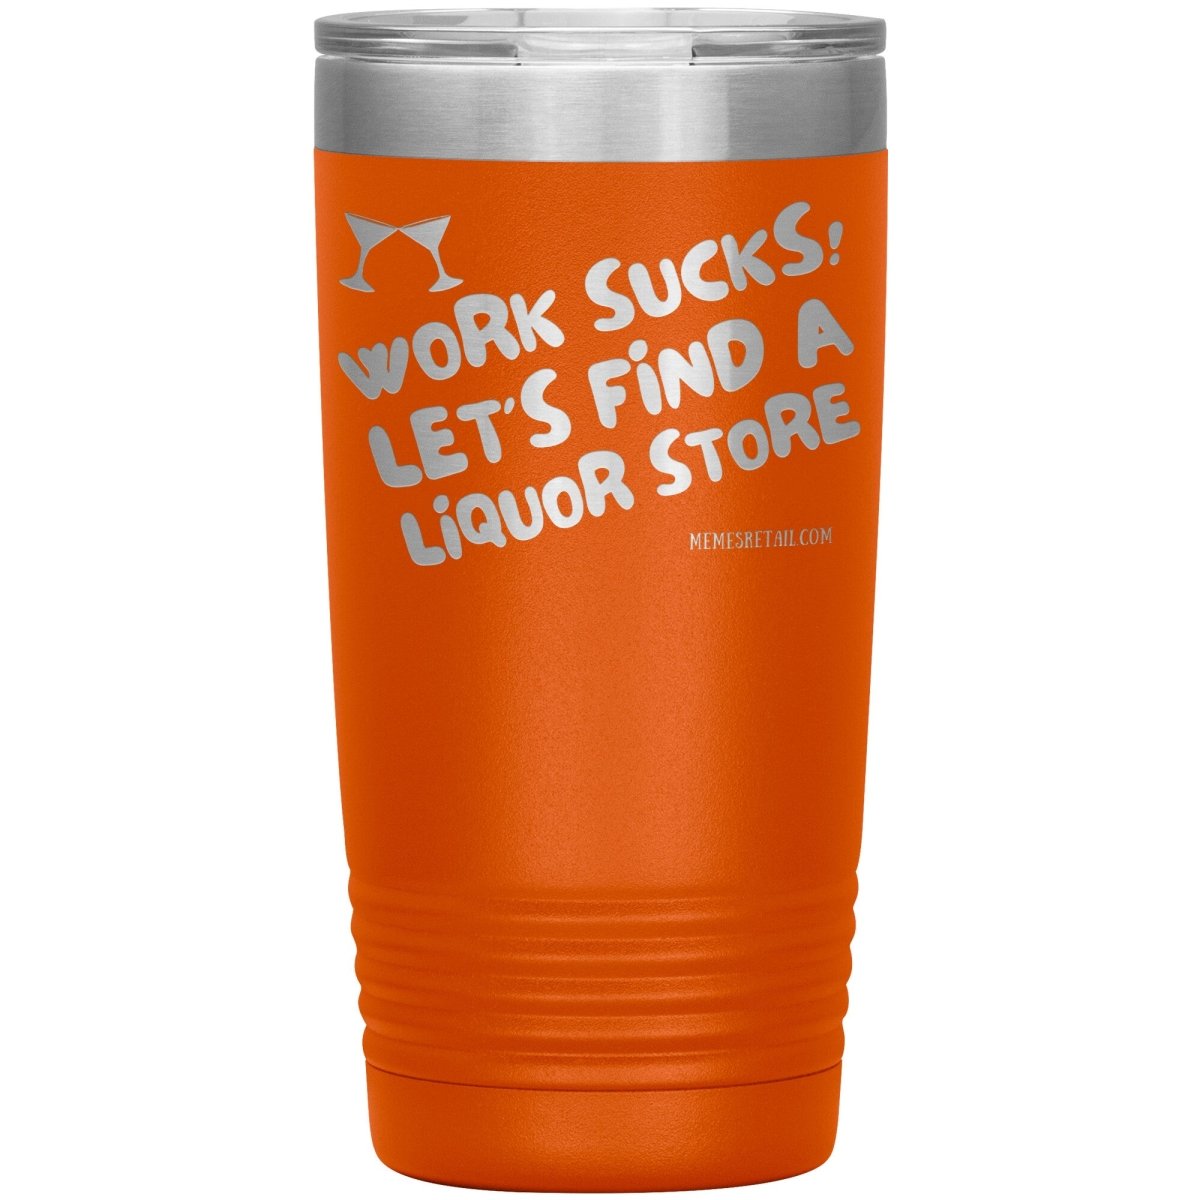 Work Sucks! Let's Find a Liquor Store Tumblers, 20oz Insulated Tumbler / Orange - MemesRetail.com